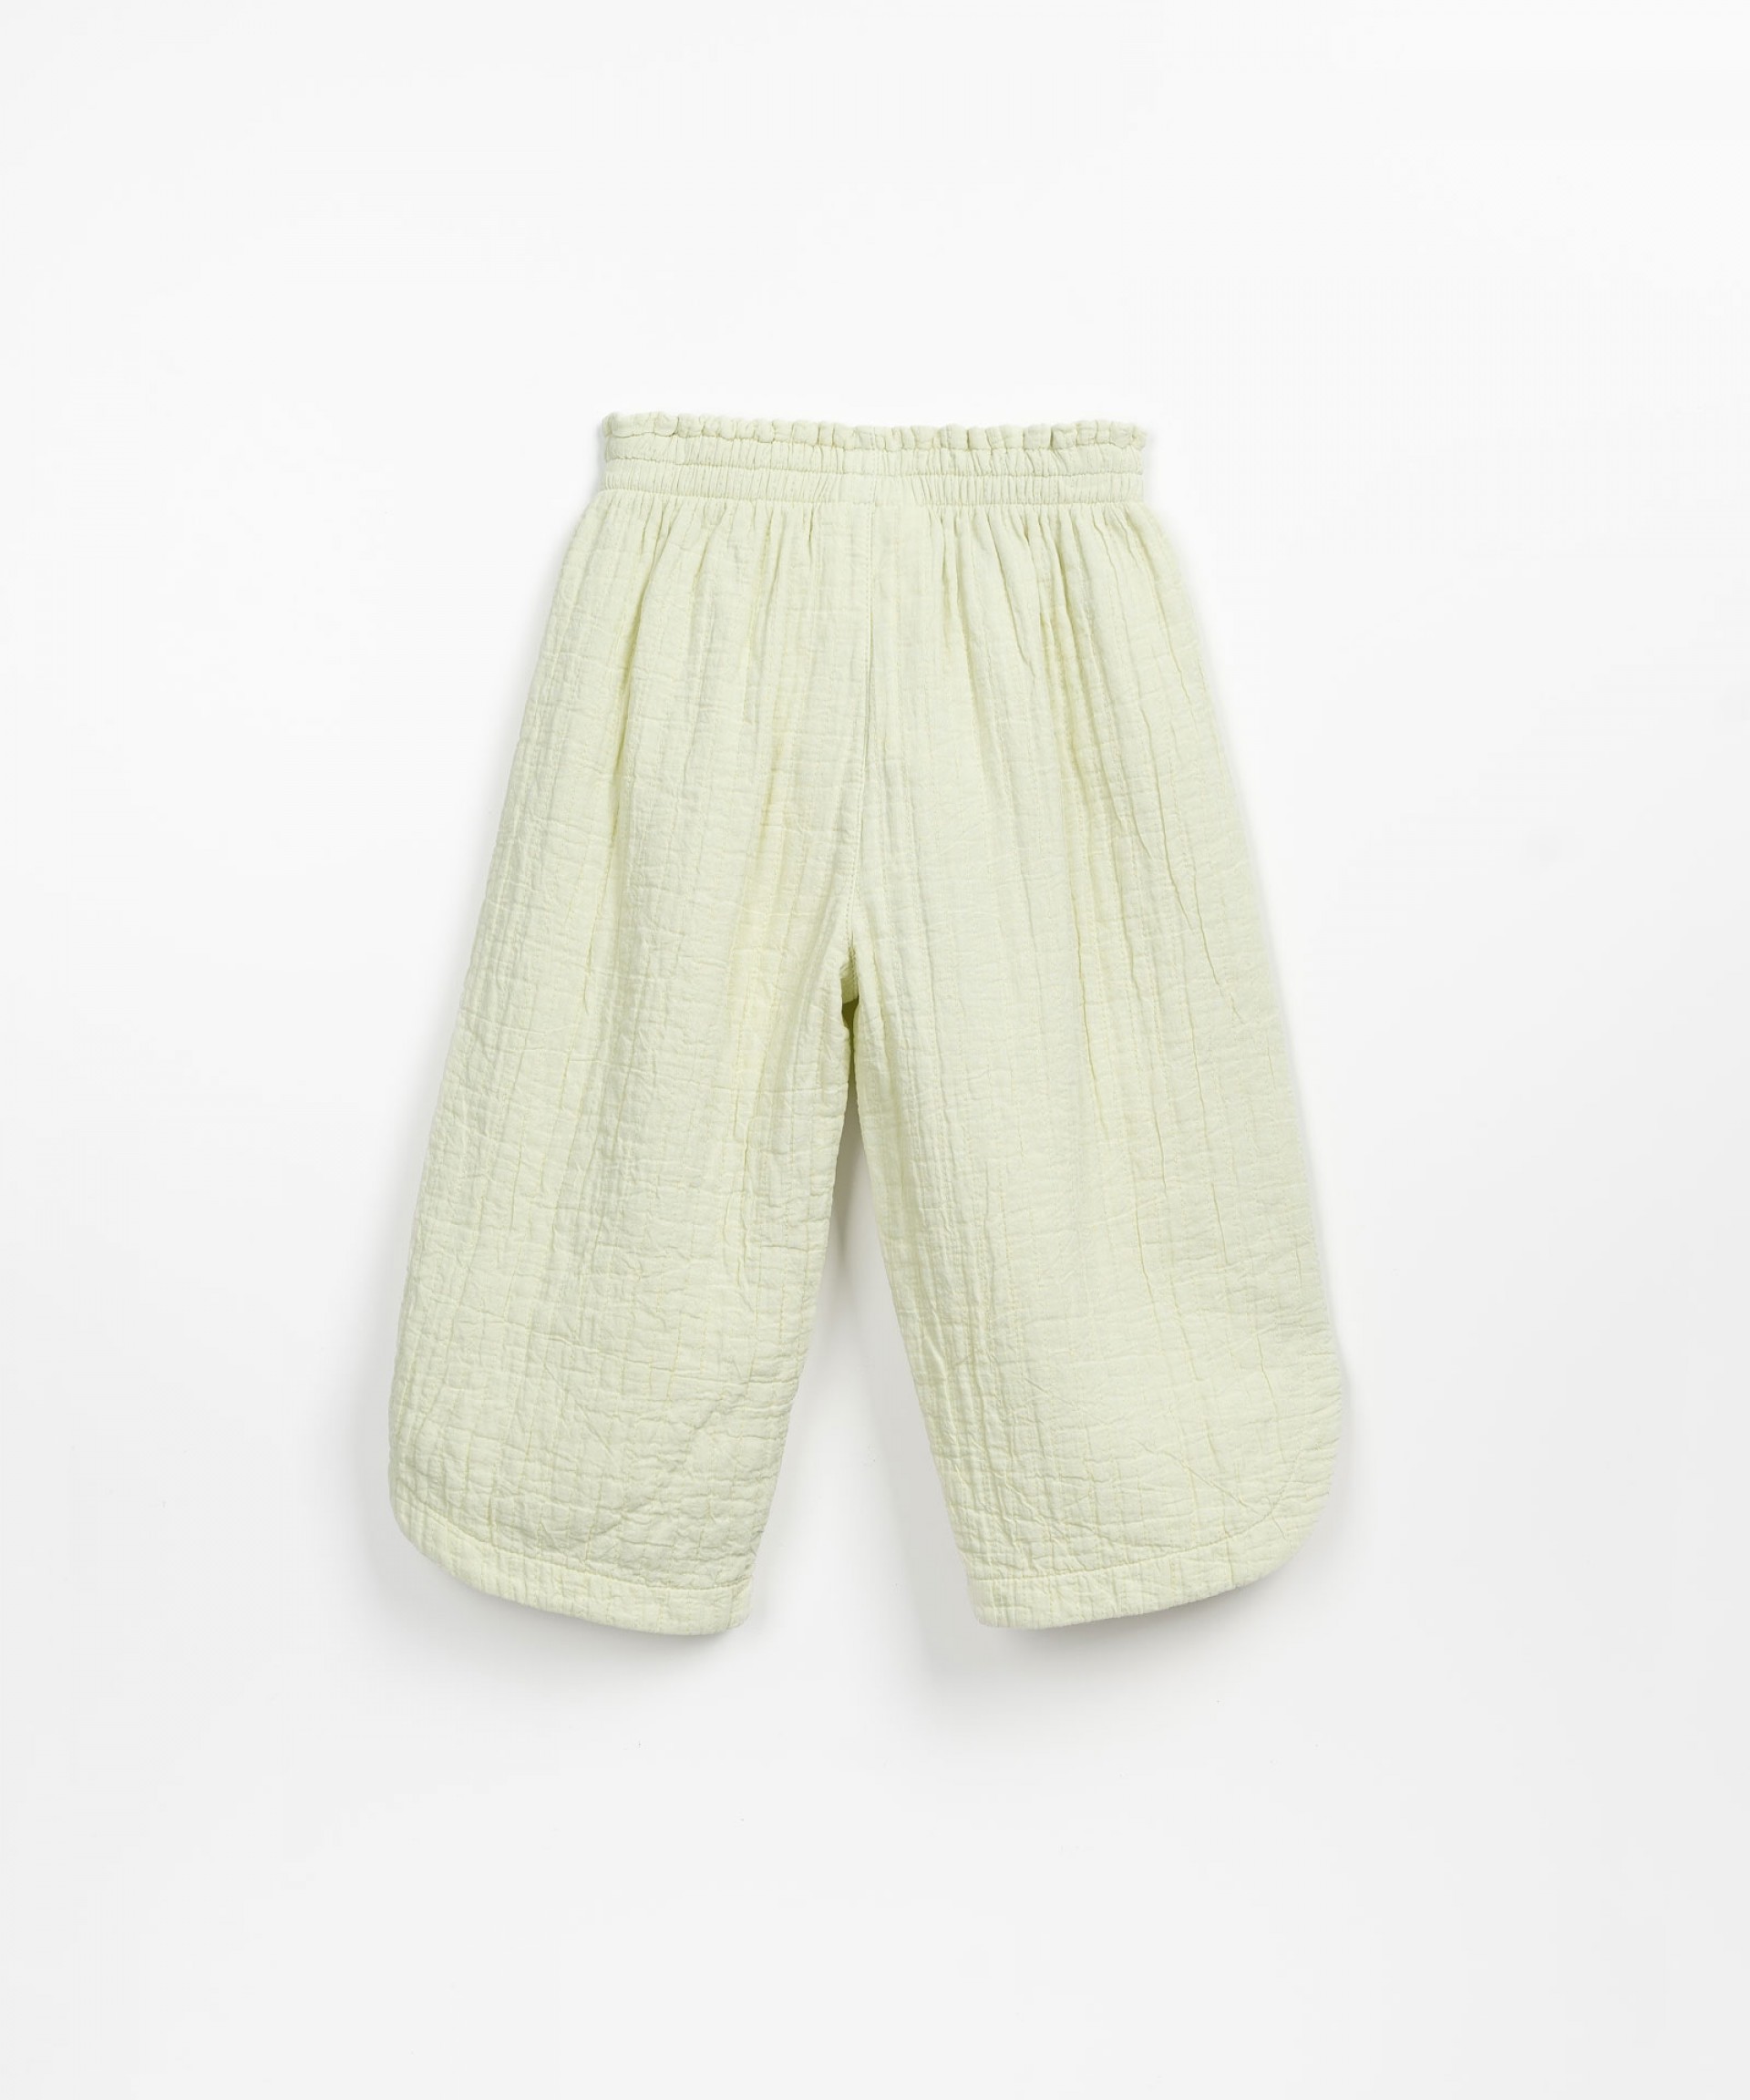 Woven trousers | Textile Art